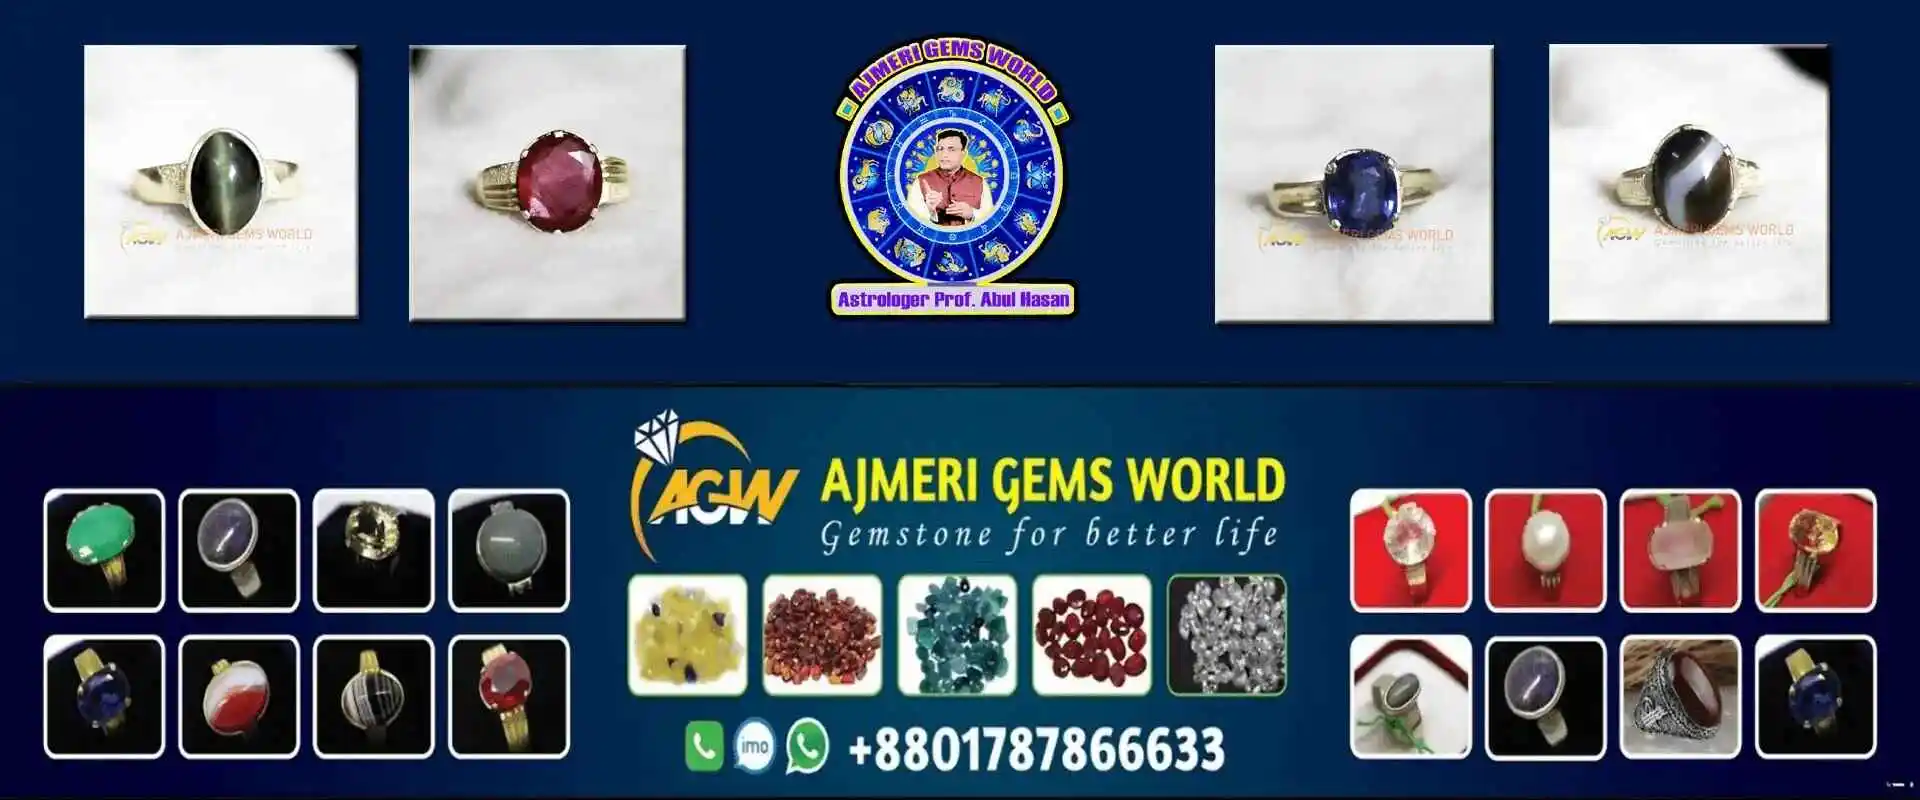 jmeri Gems World - gemstone - diamonds - emeralds - rubies and sapphires.